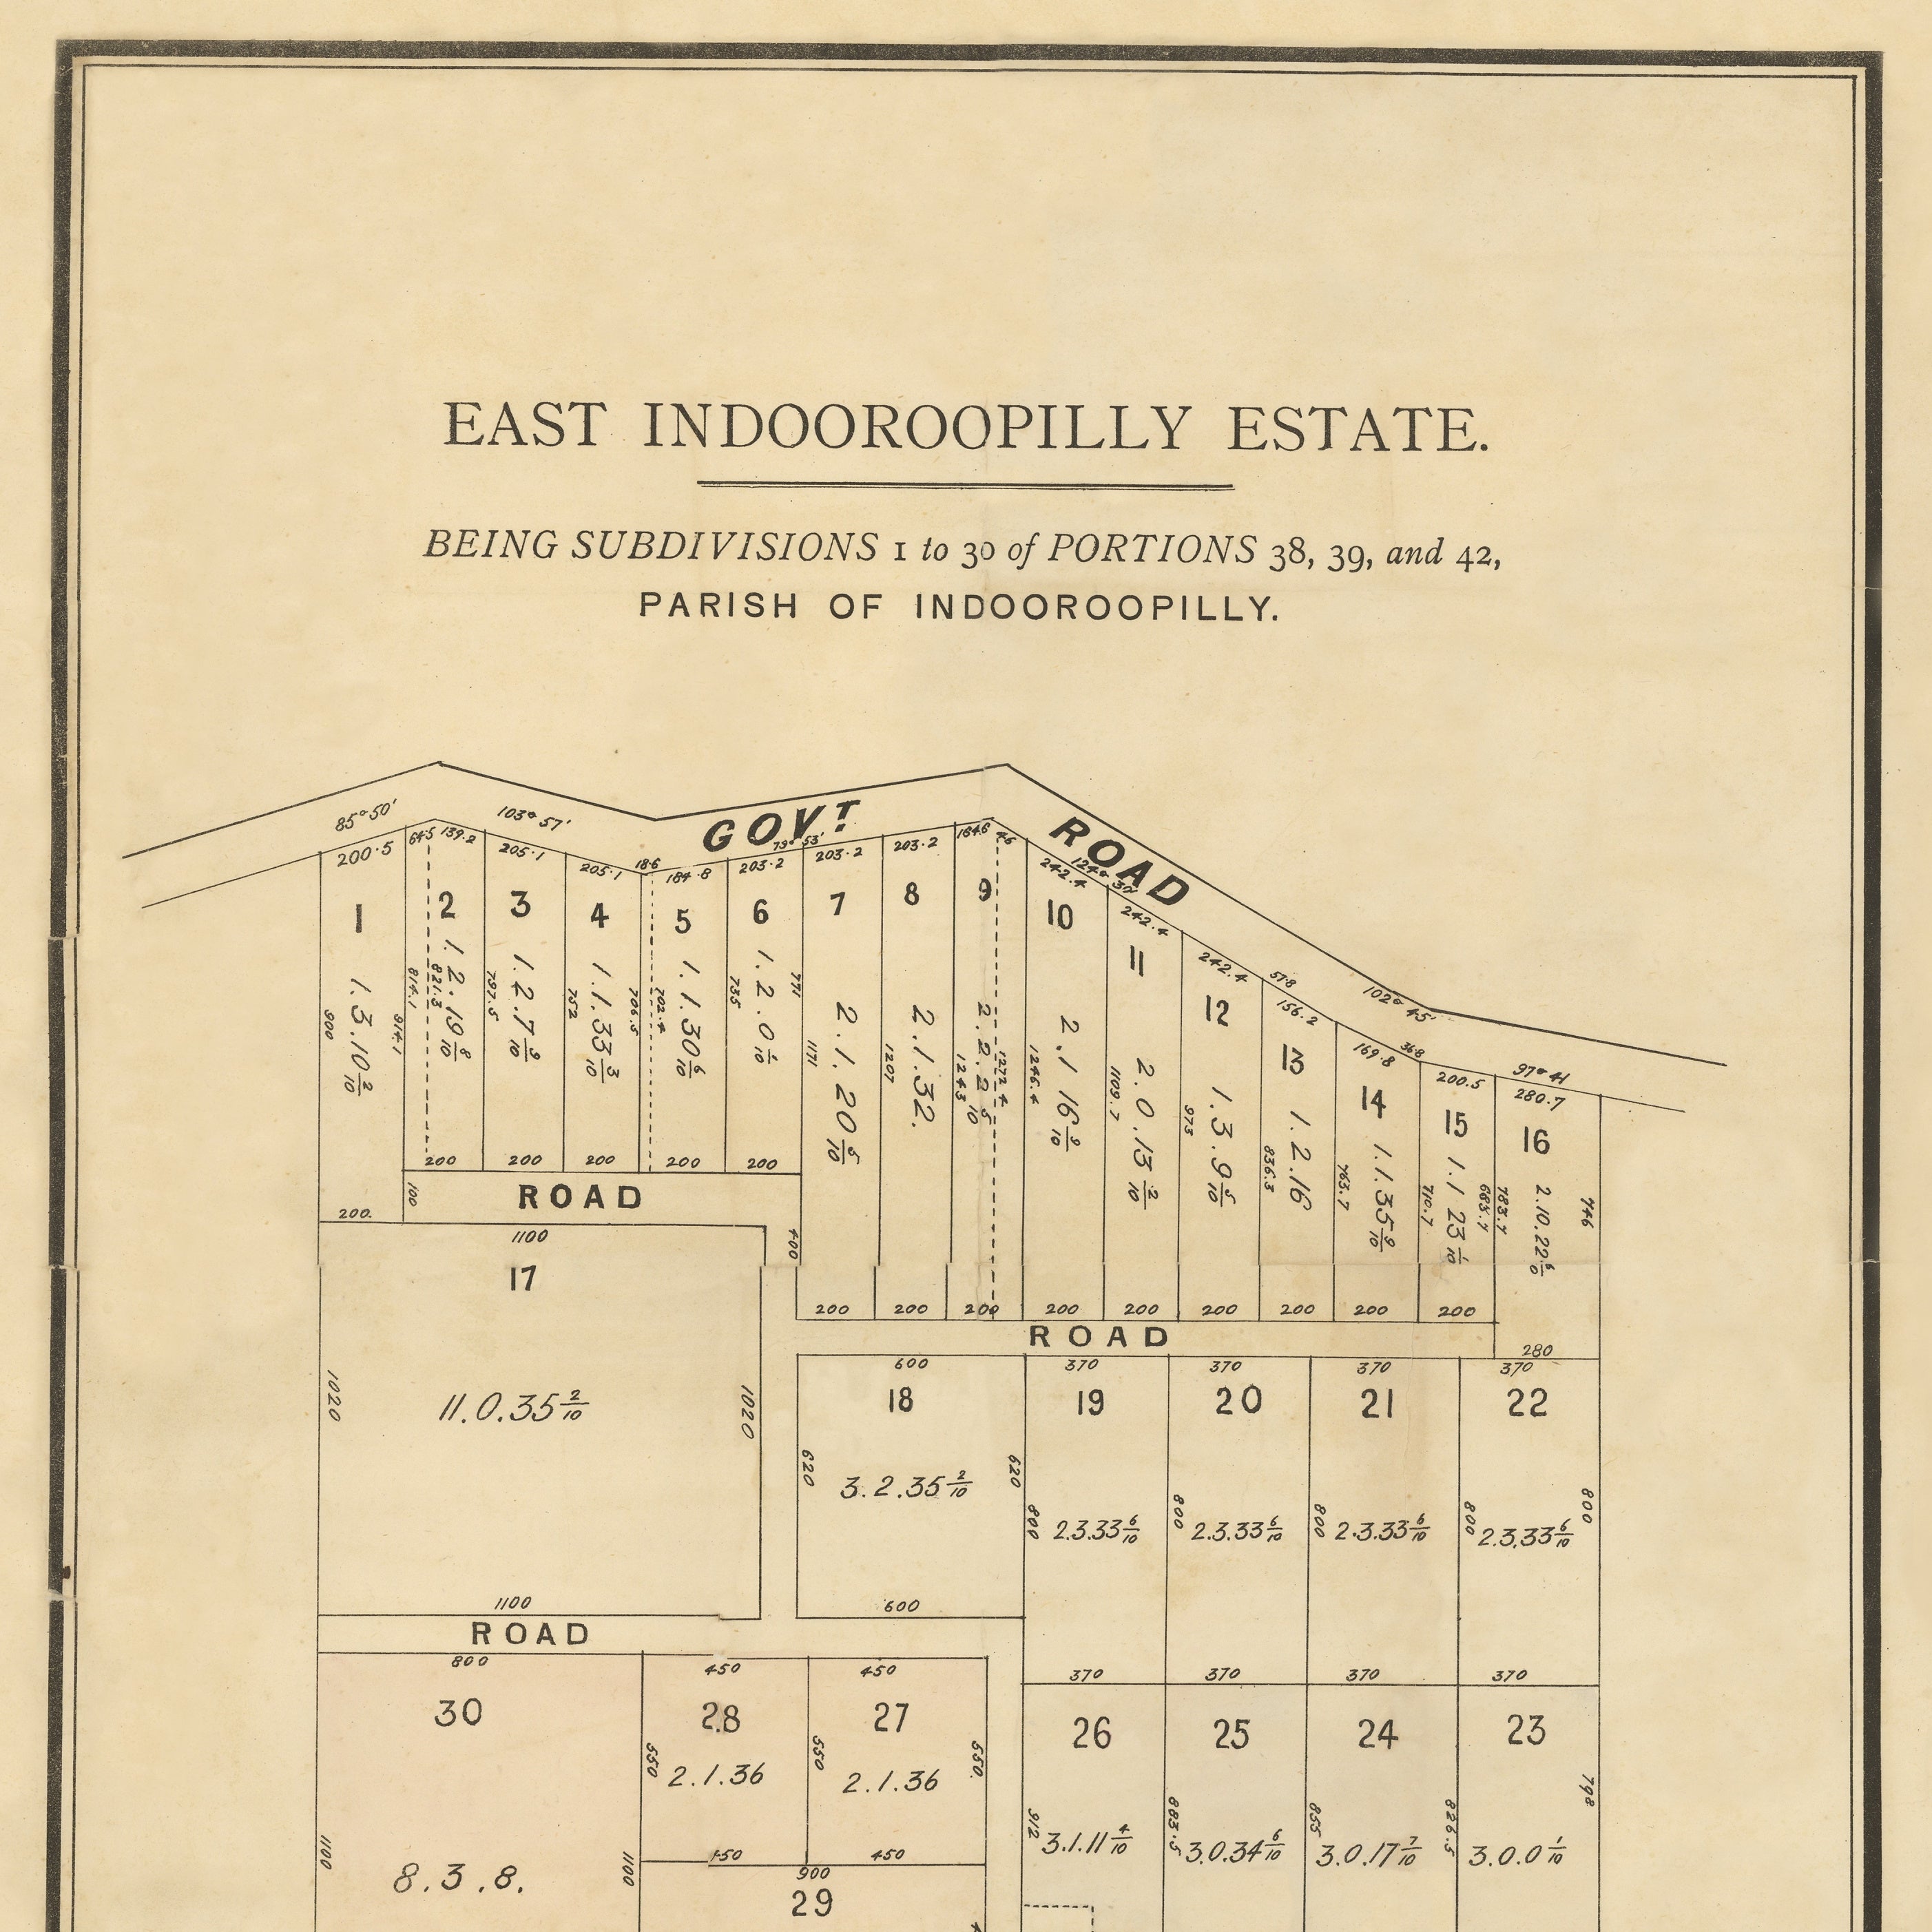 1876 Indooroopilly - East Indooroopilly Estate